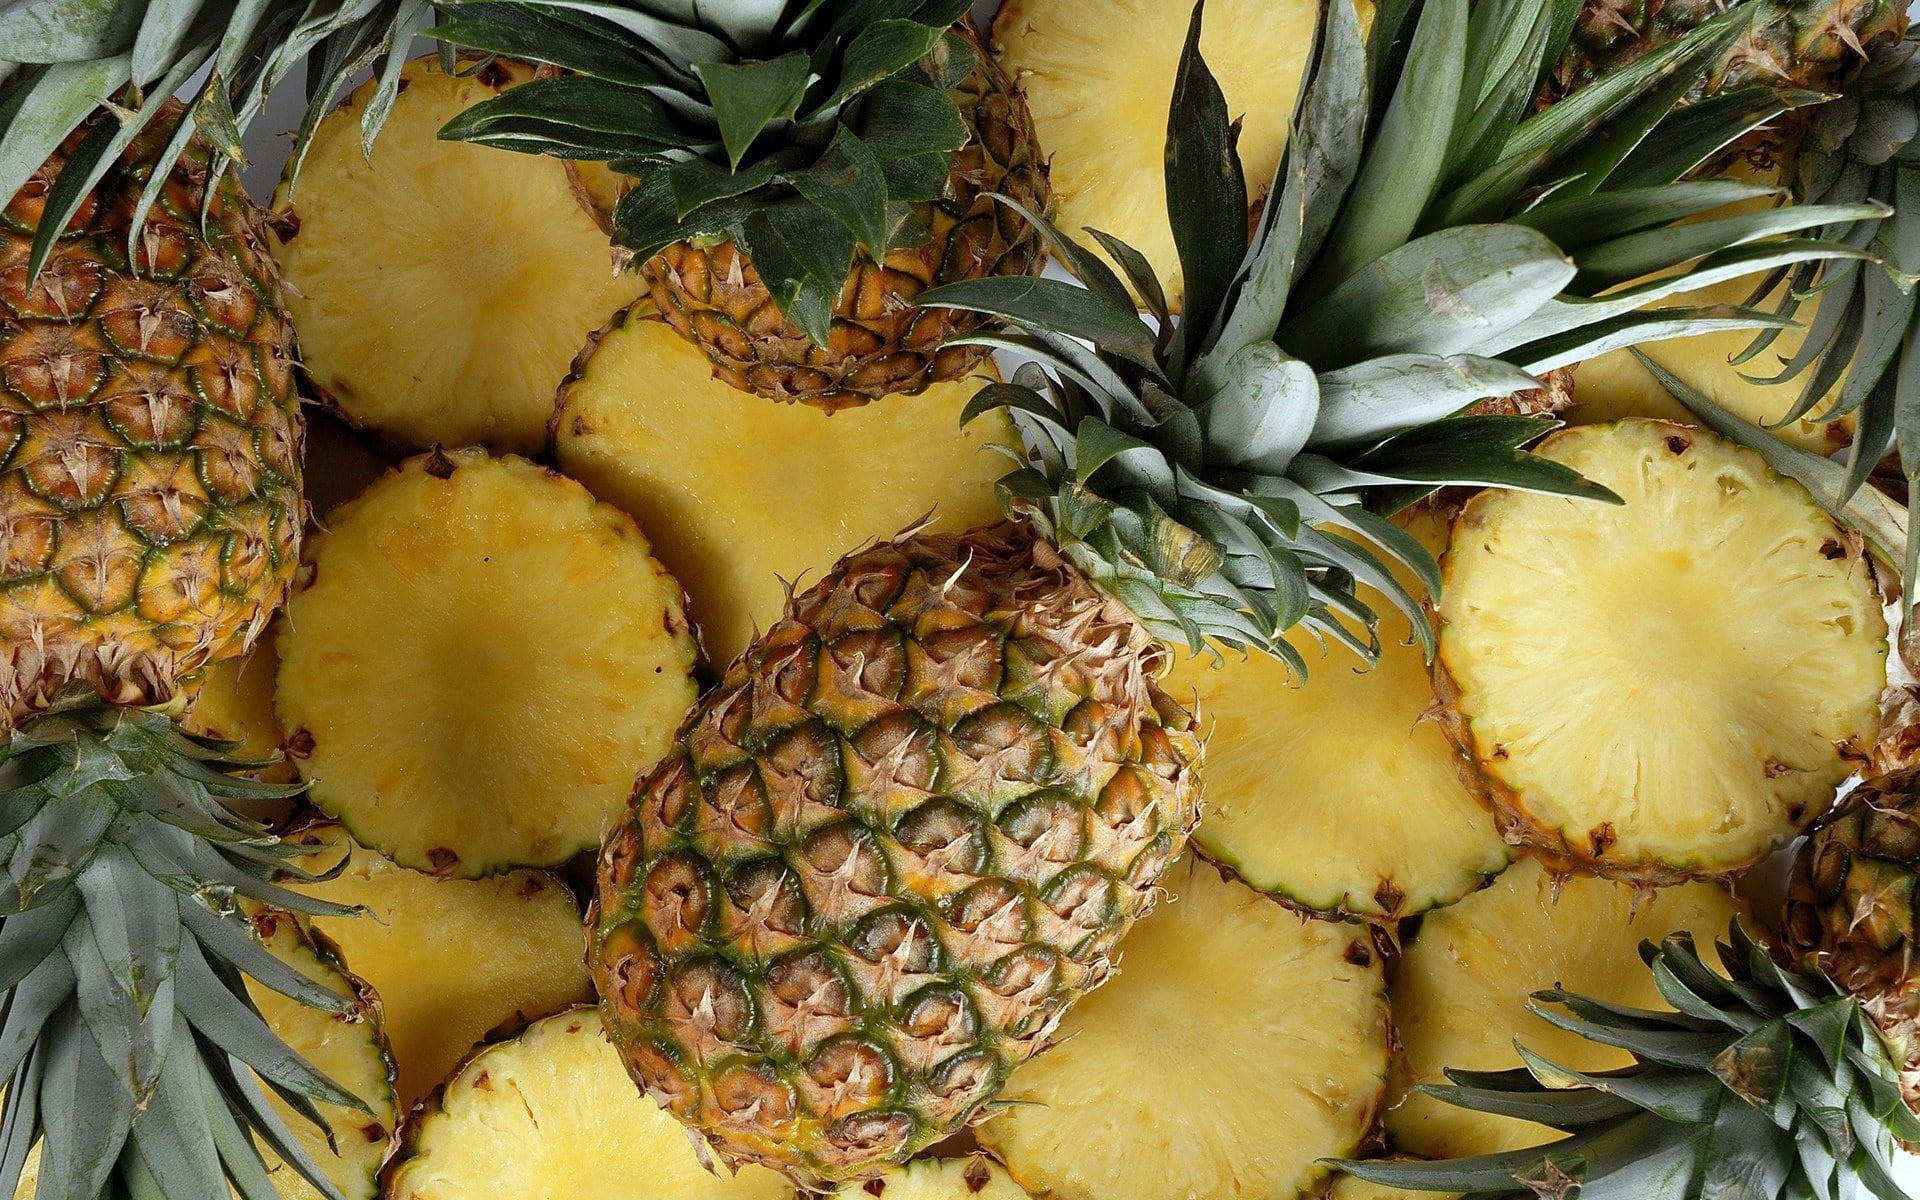 Rach the pineapple